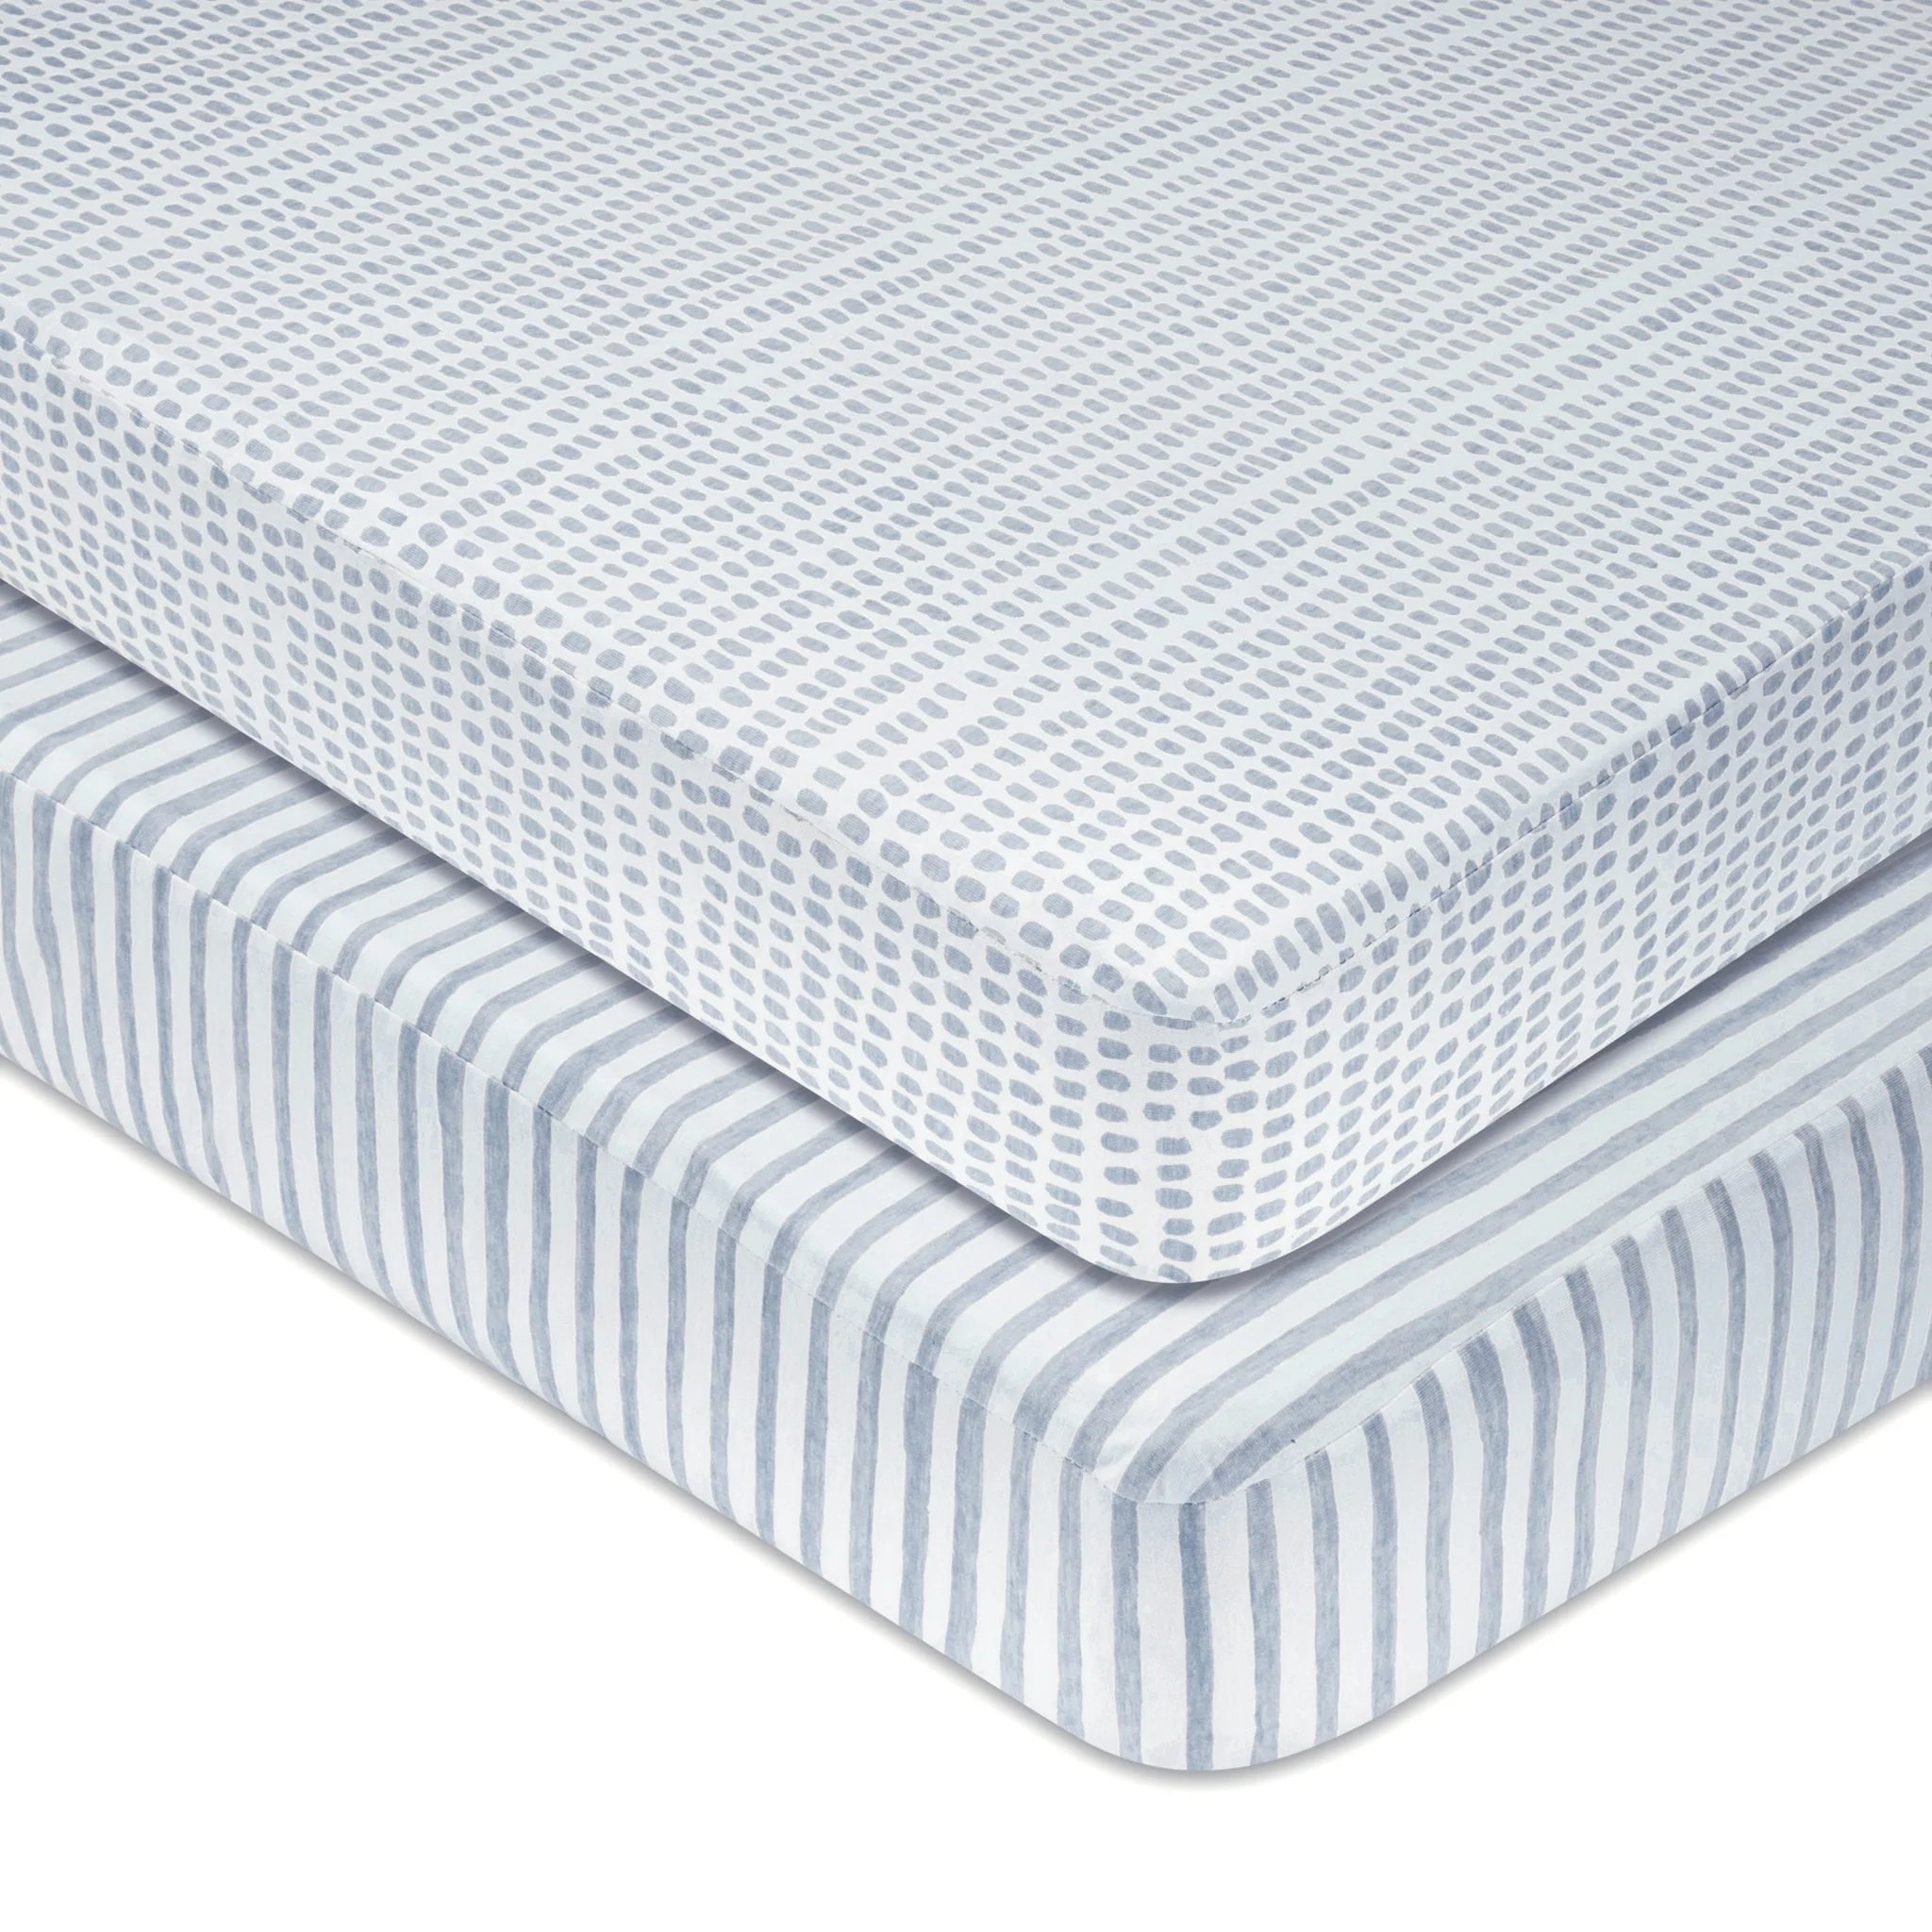 Ely's & Co Blue Stripes & Splash Waterproof Mini Crib Sheets